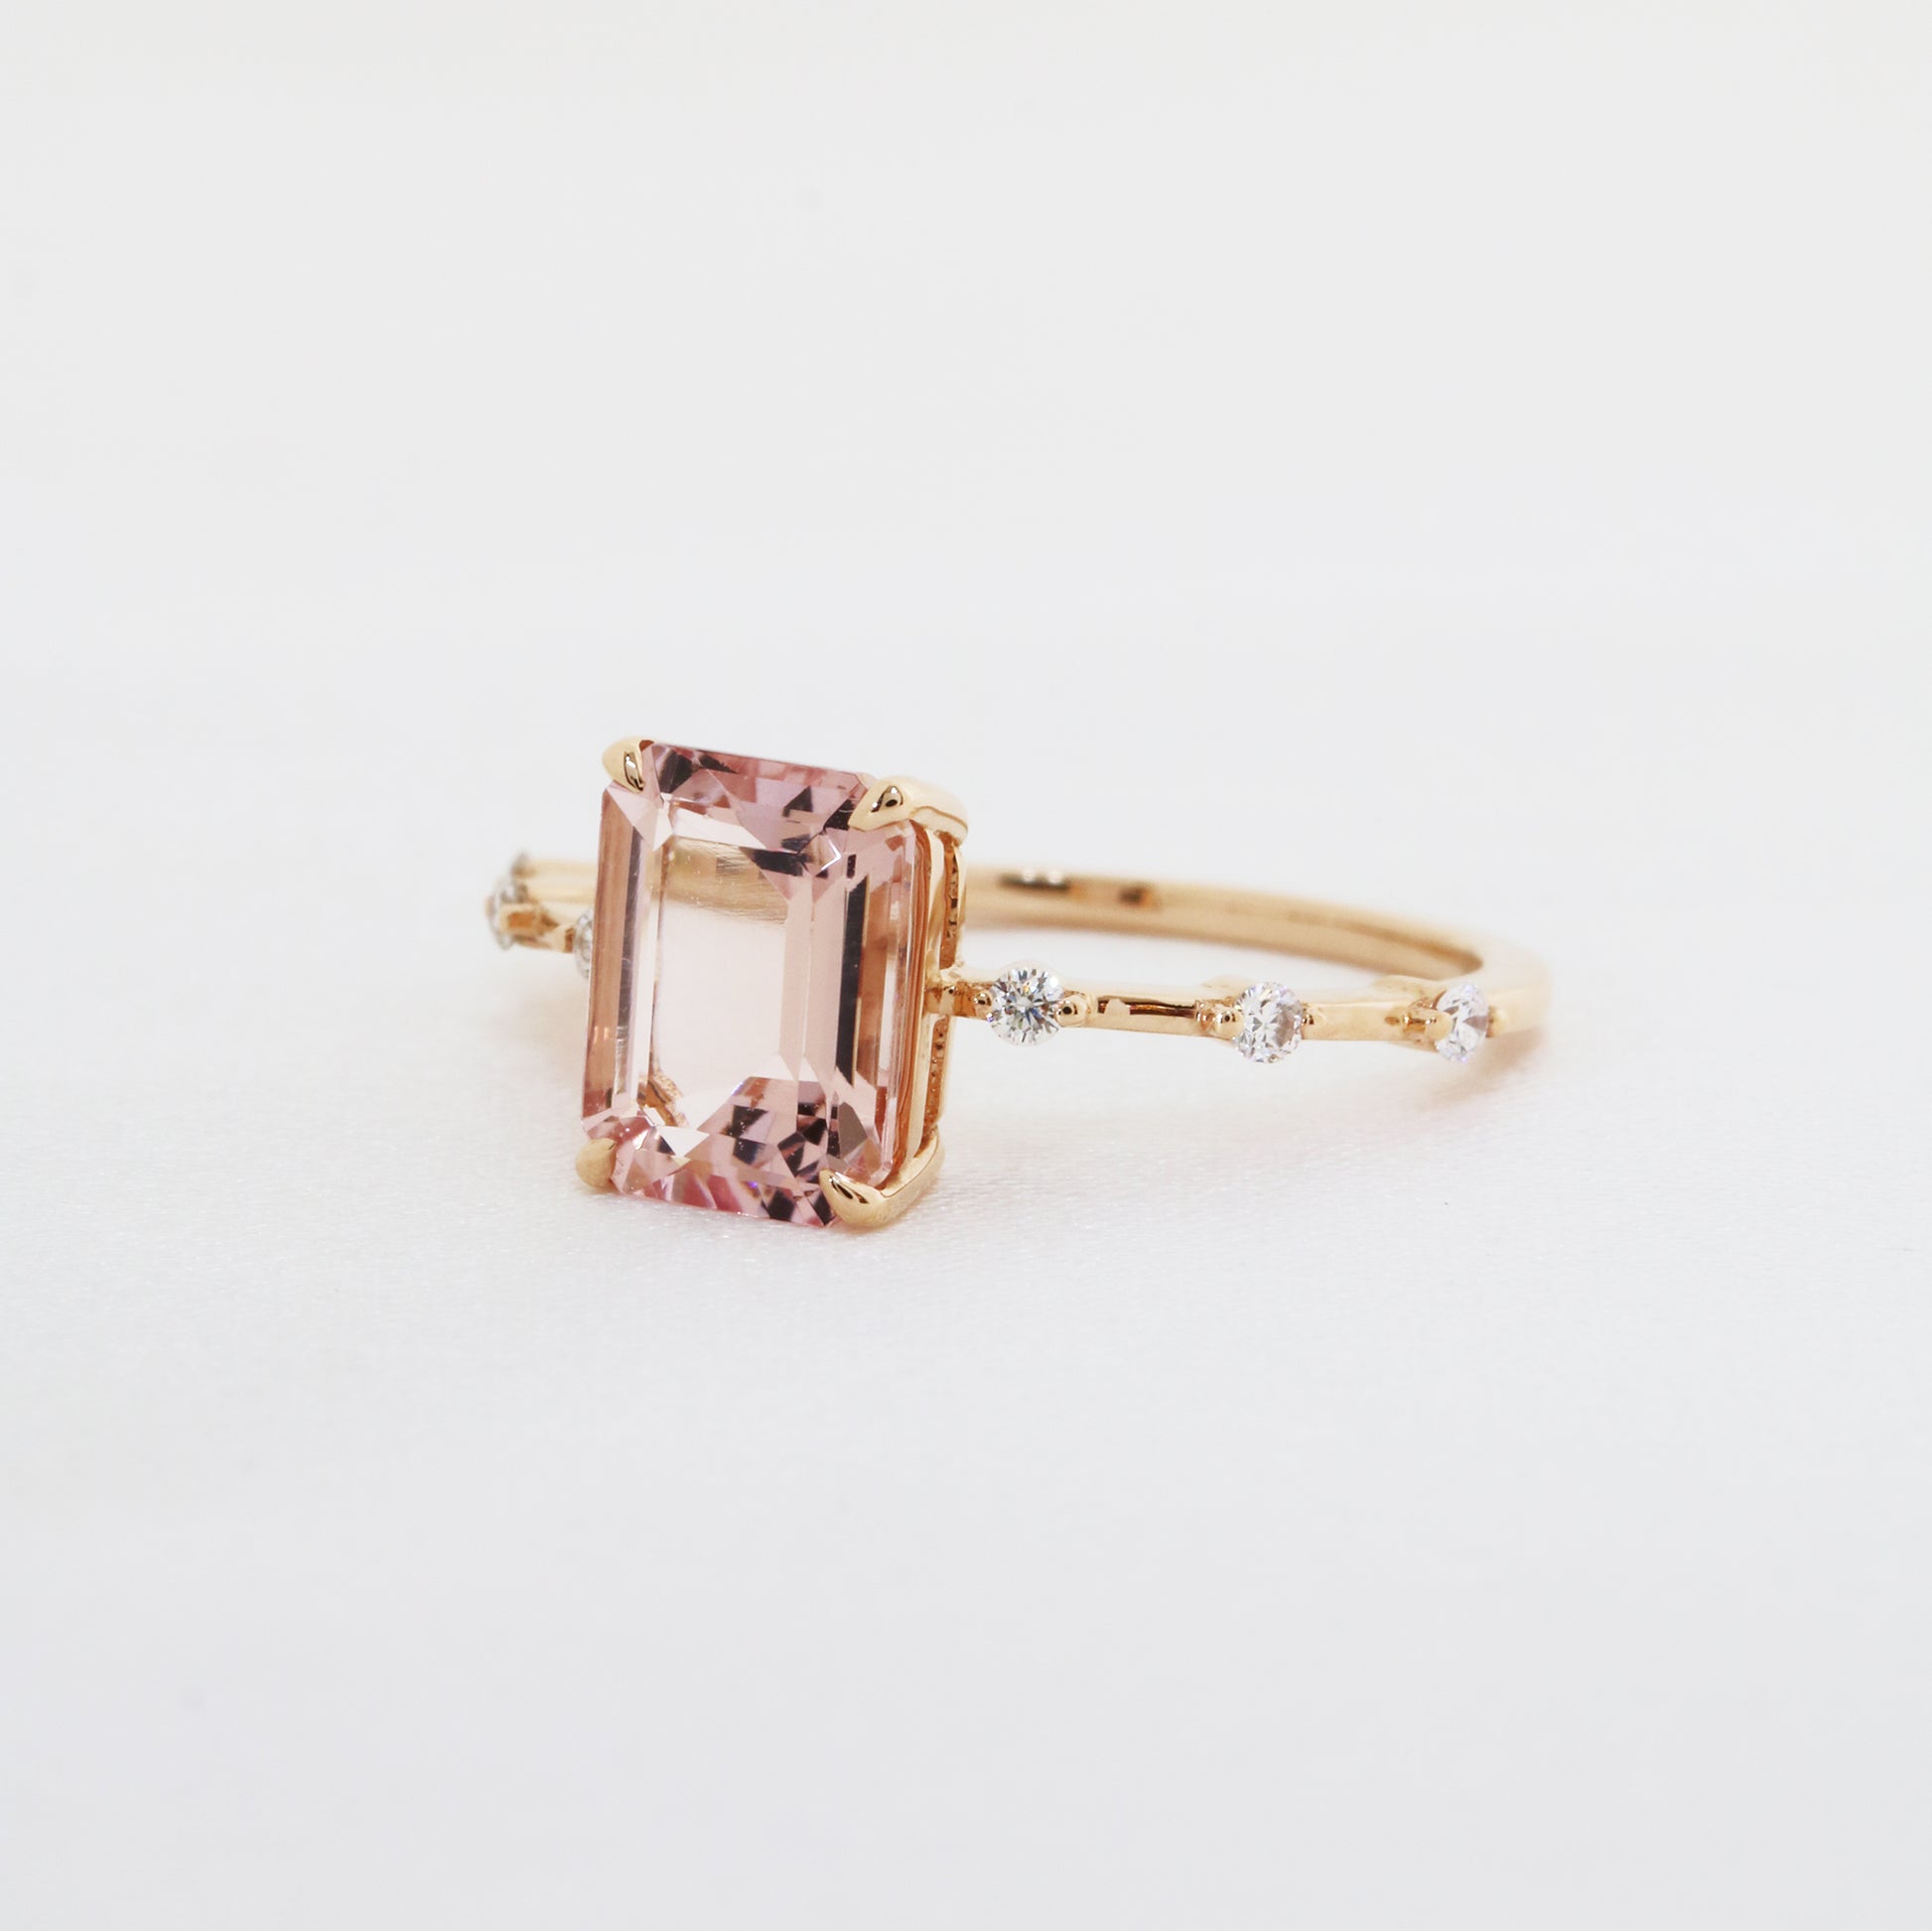 18k玫瑰粉紅摩根石鑽石戒指側面 18k Rose Gold Emerald-cut Morganite Diamond Ring on side view